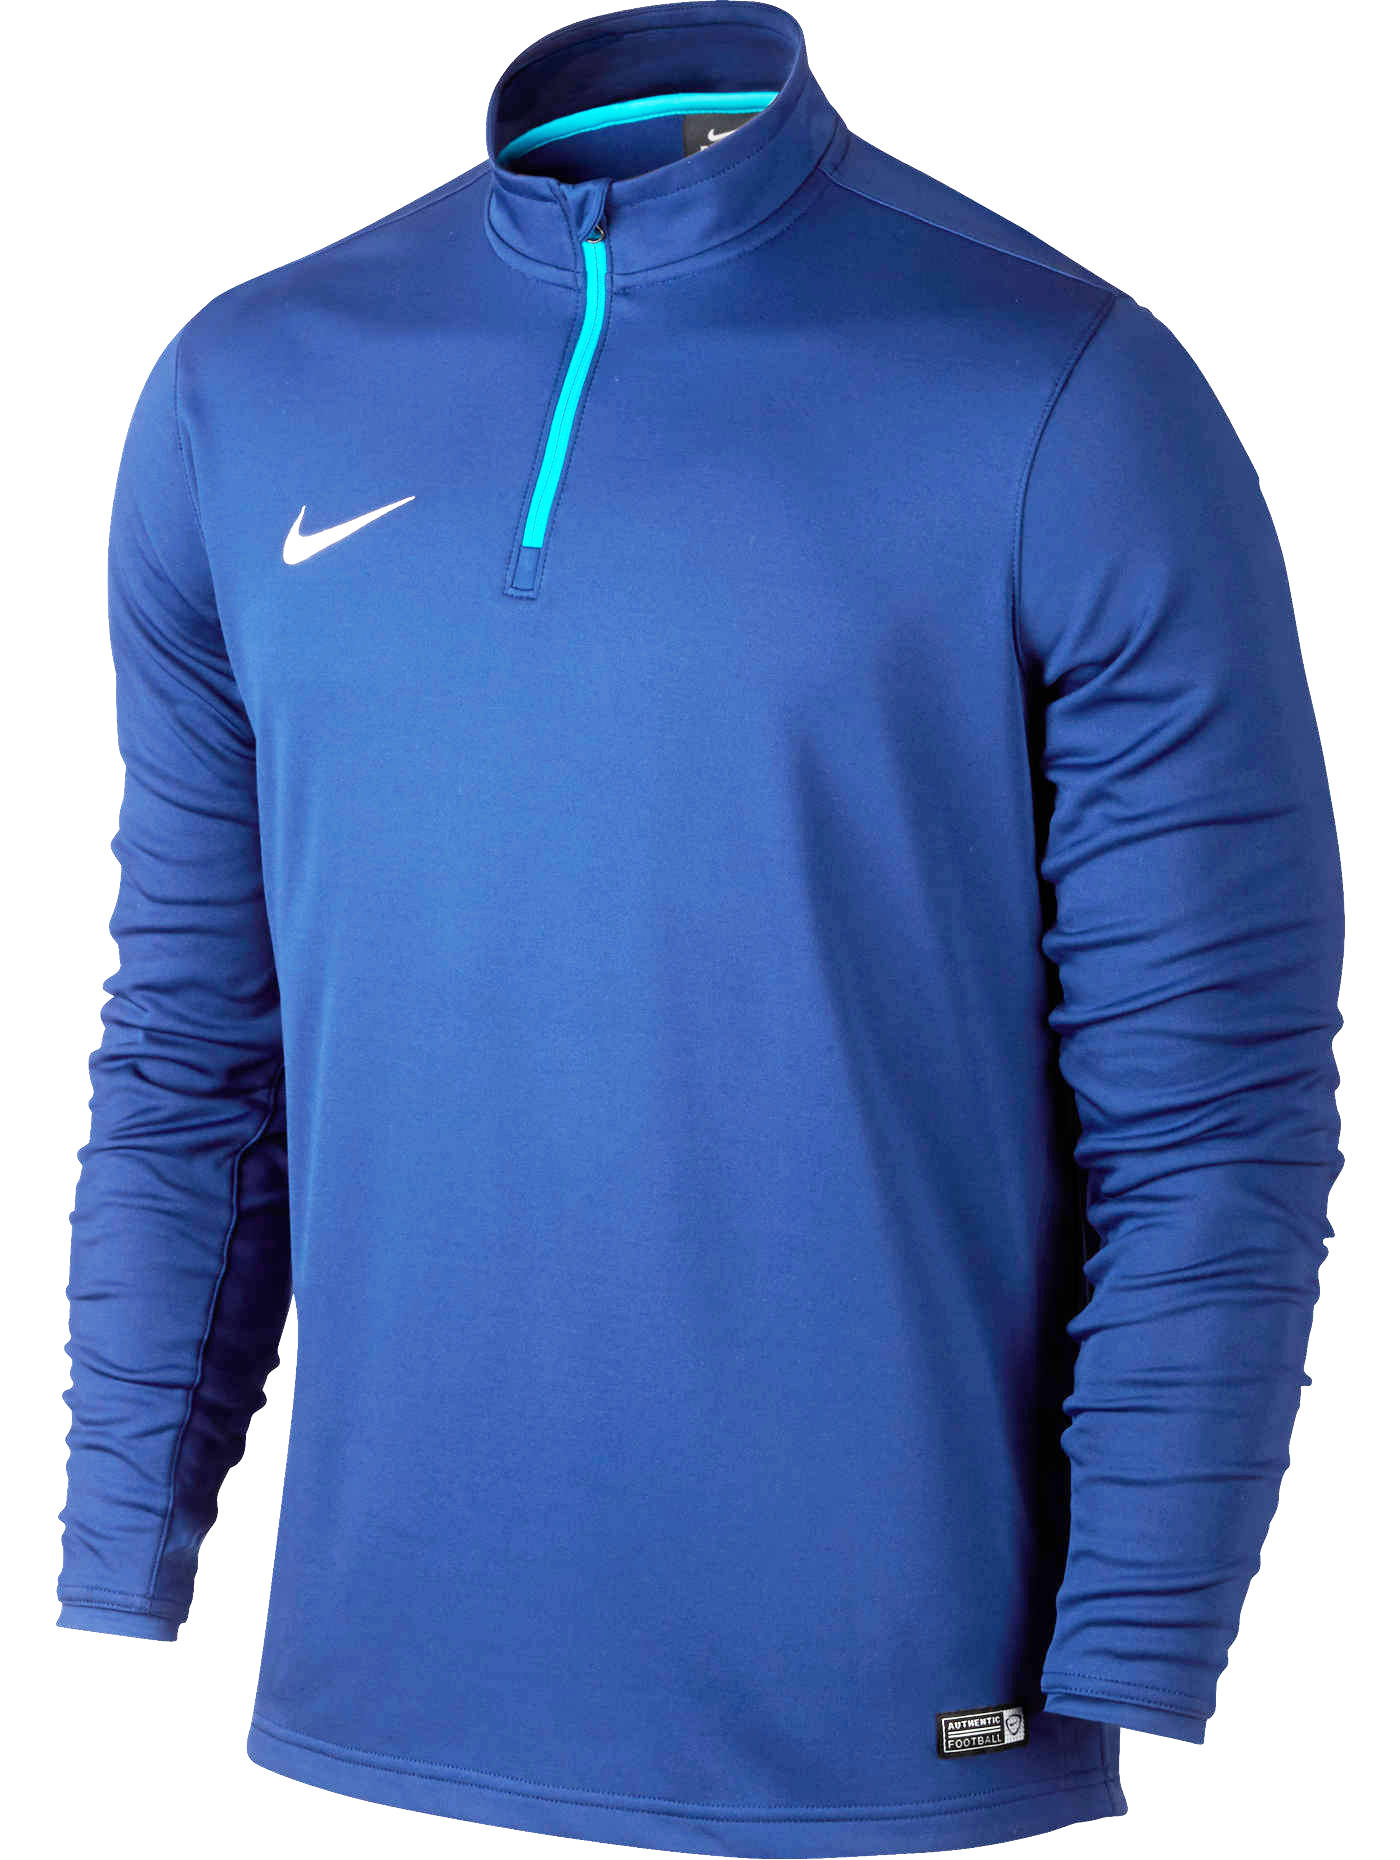 Academy Midlayer top Nike Training Sweatshirt Felpa 2015 16 Men | eBay